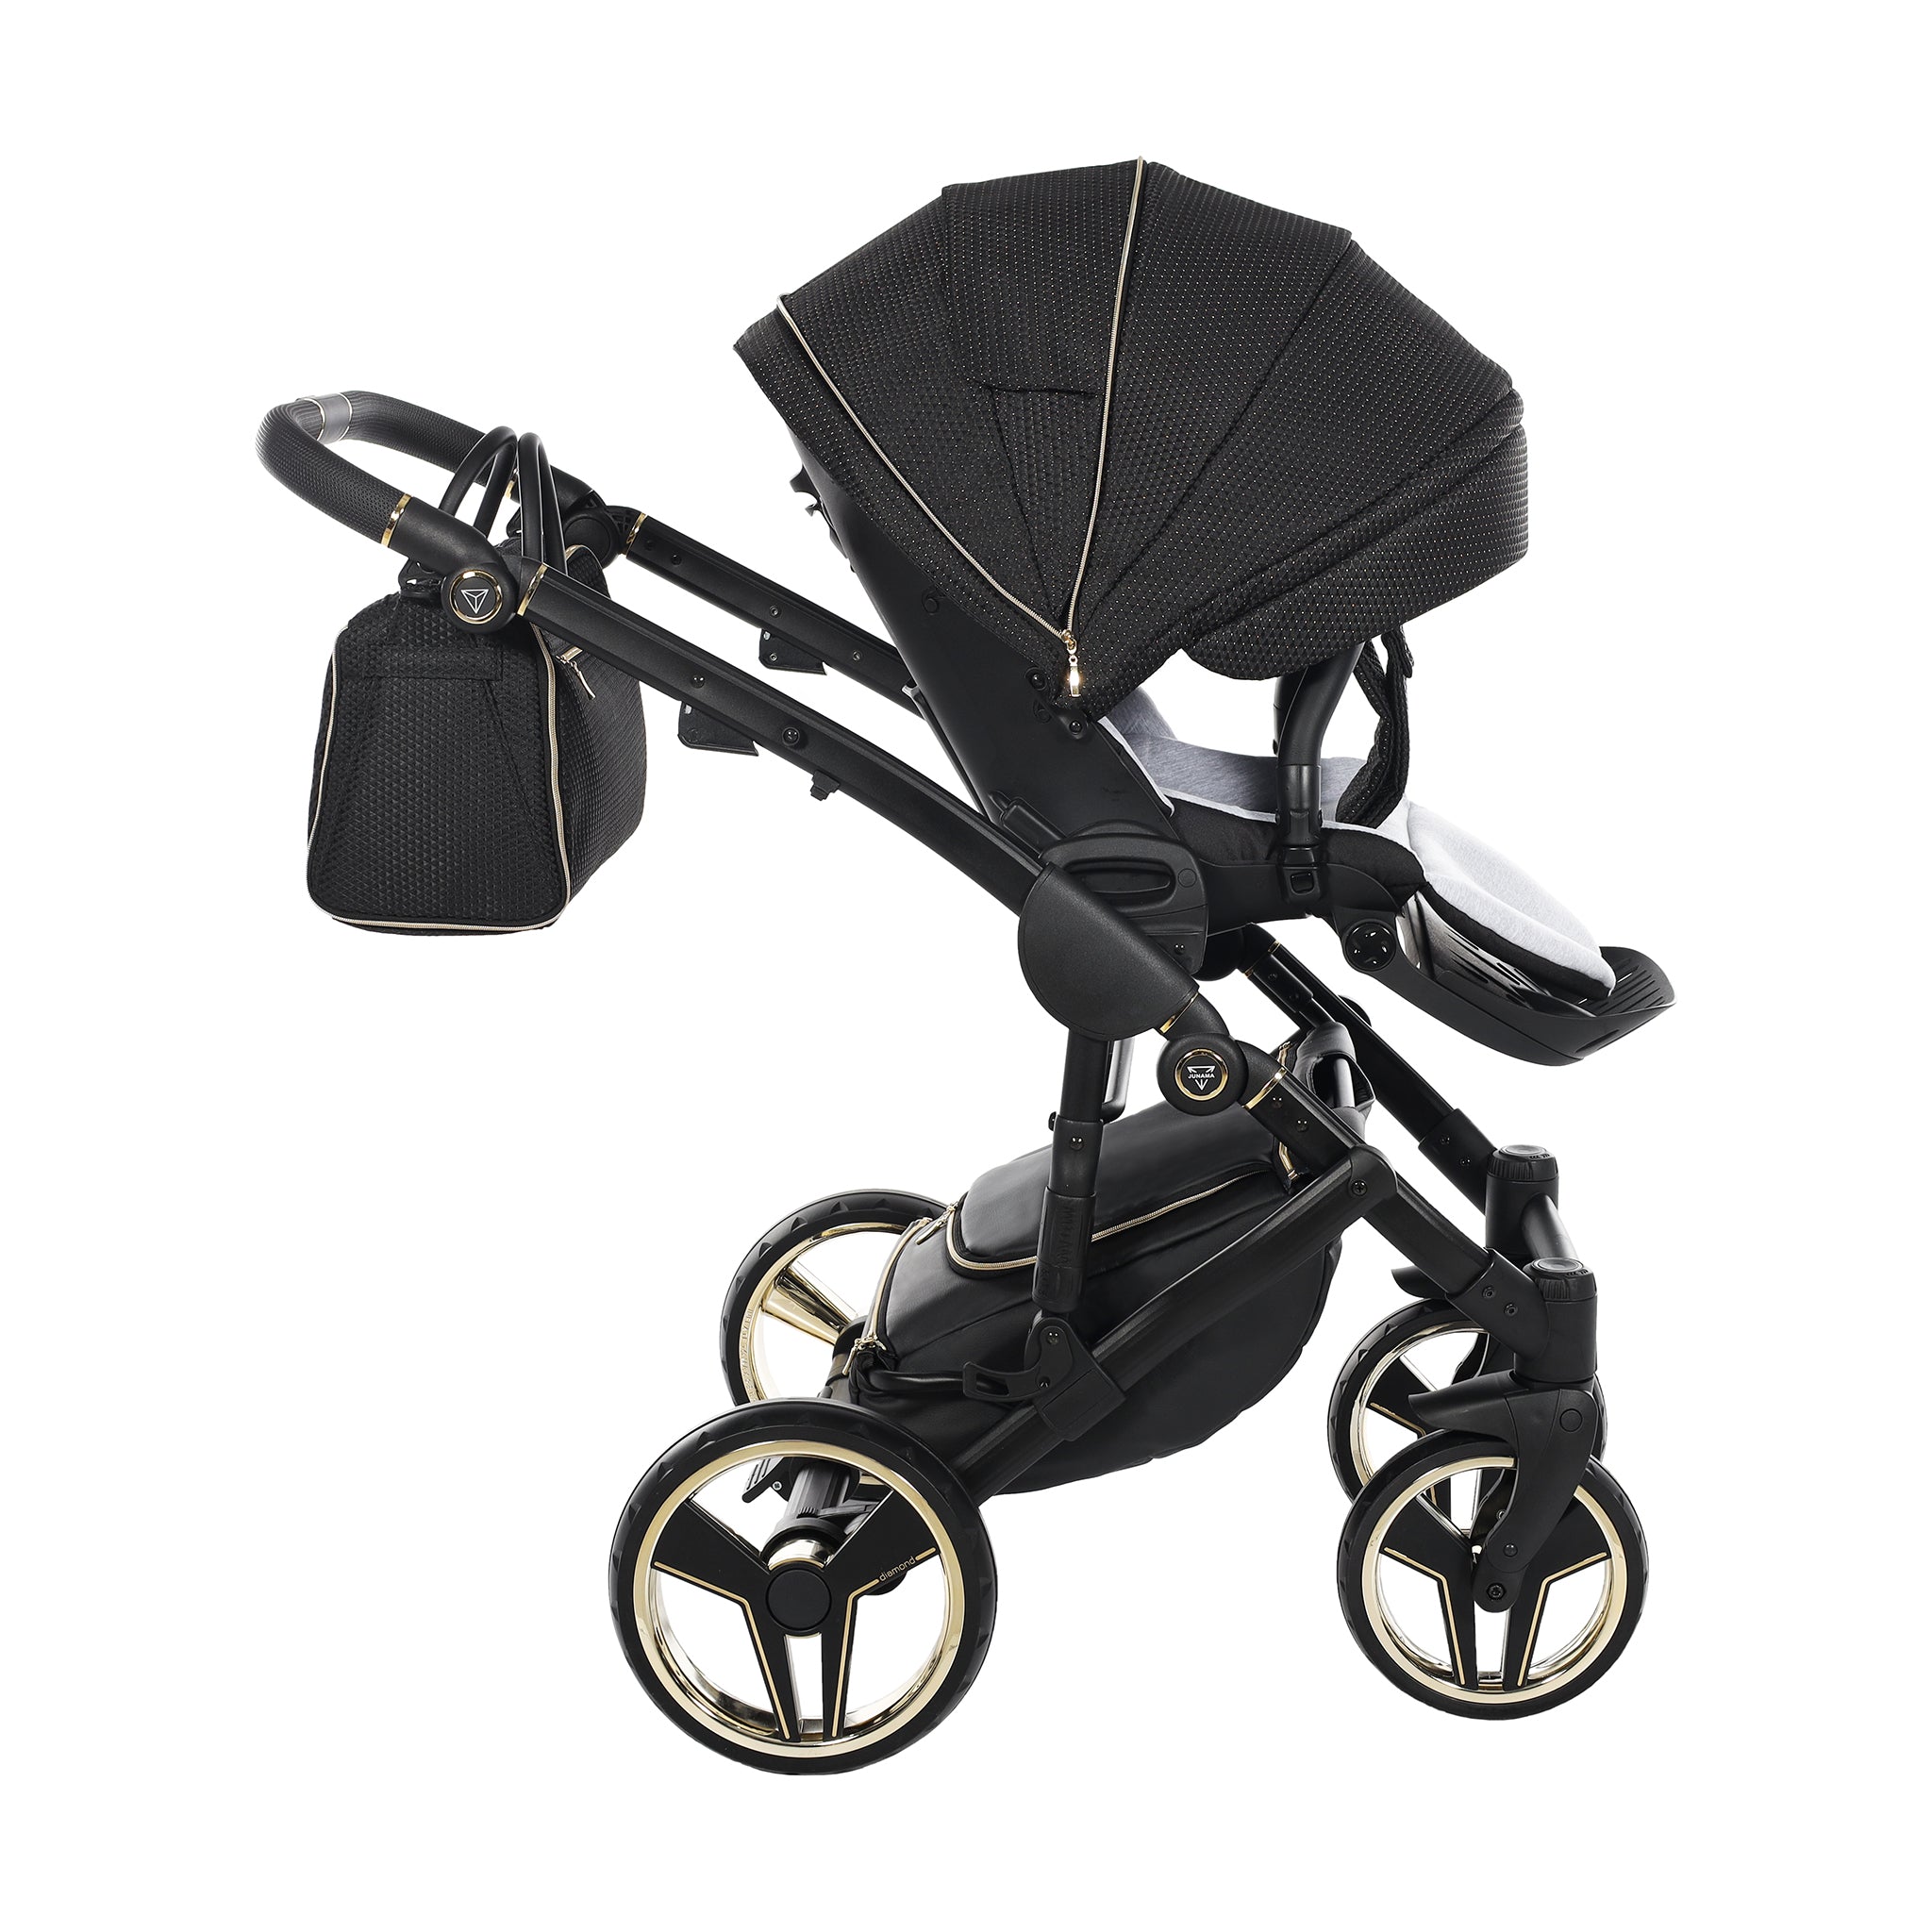 Junama Mirror, baby prams or stroller 2 in 1 - Gold chrome and Black, Code number: JUNMIR02